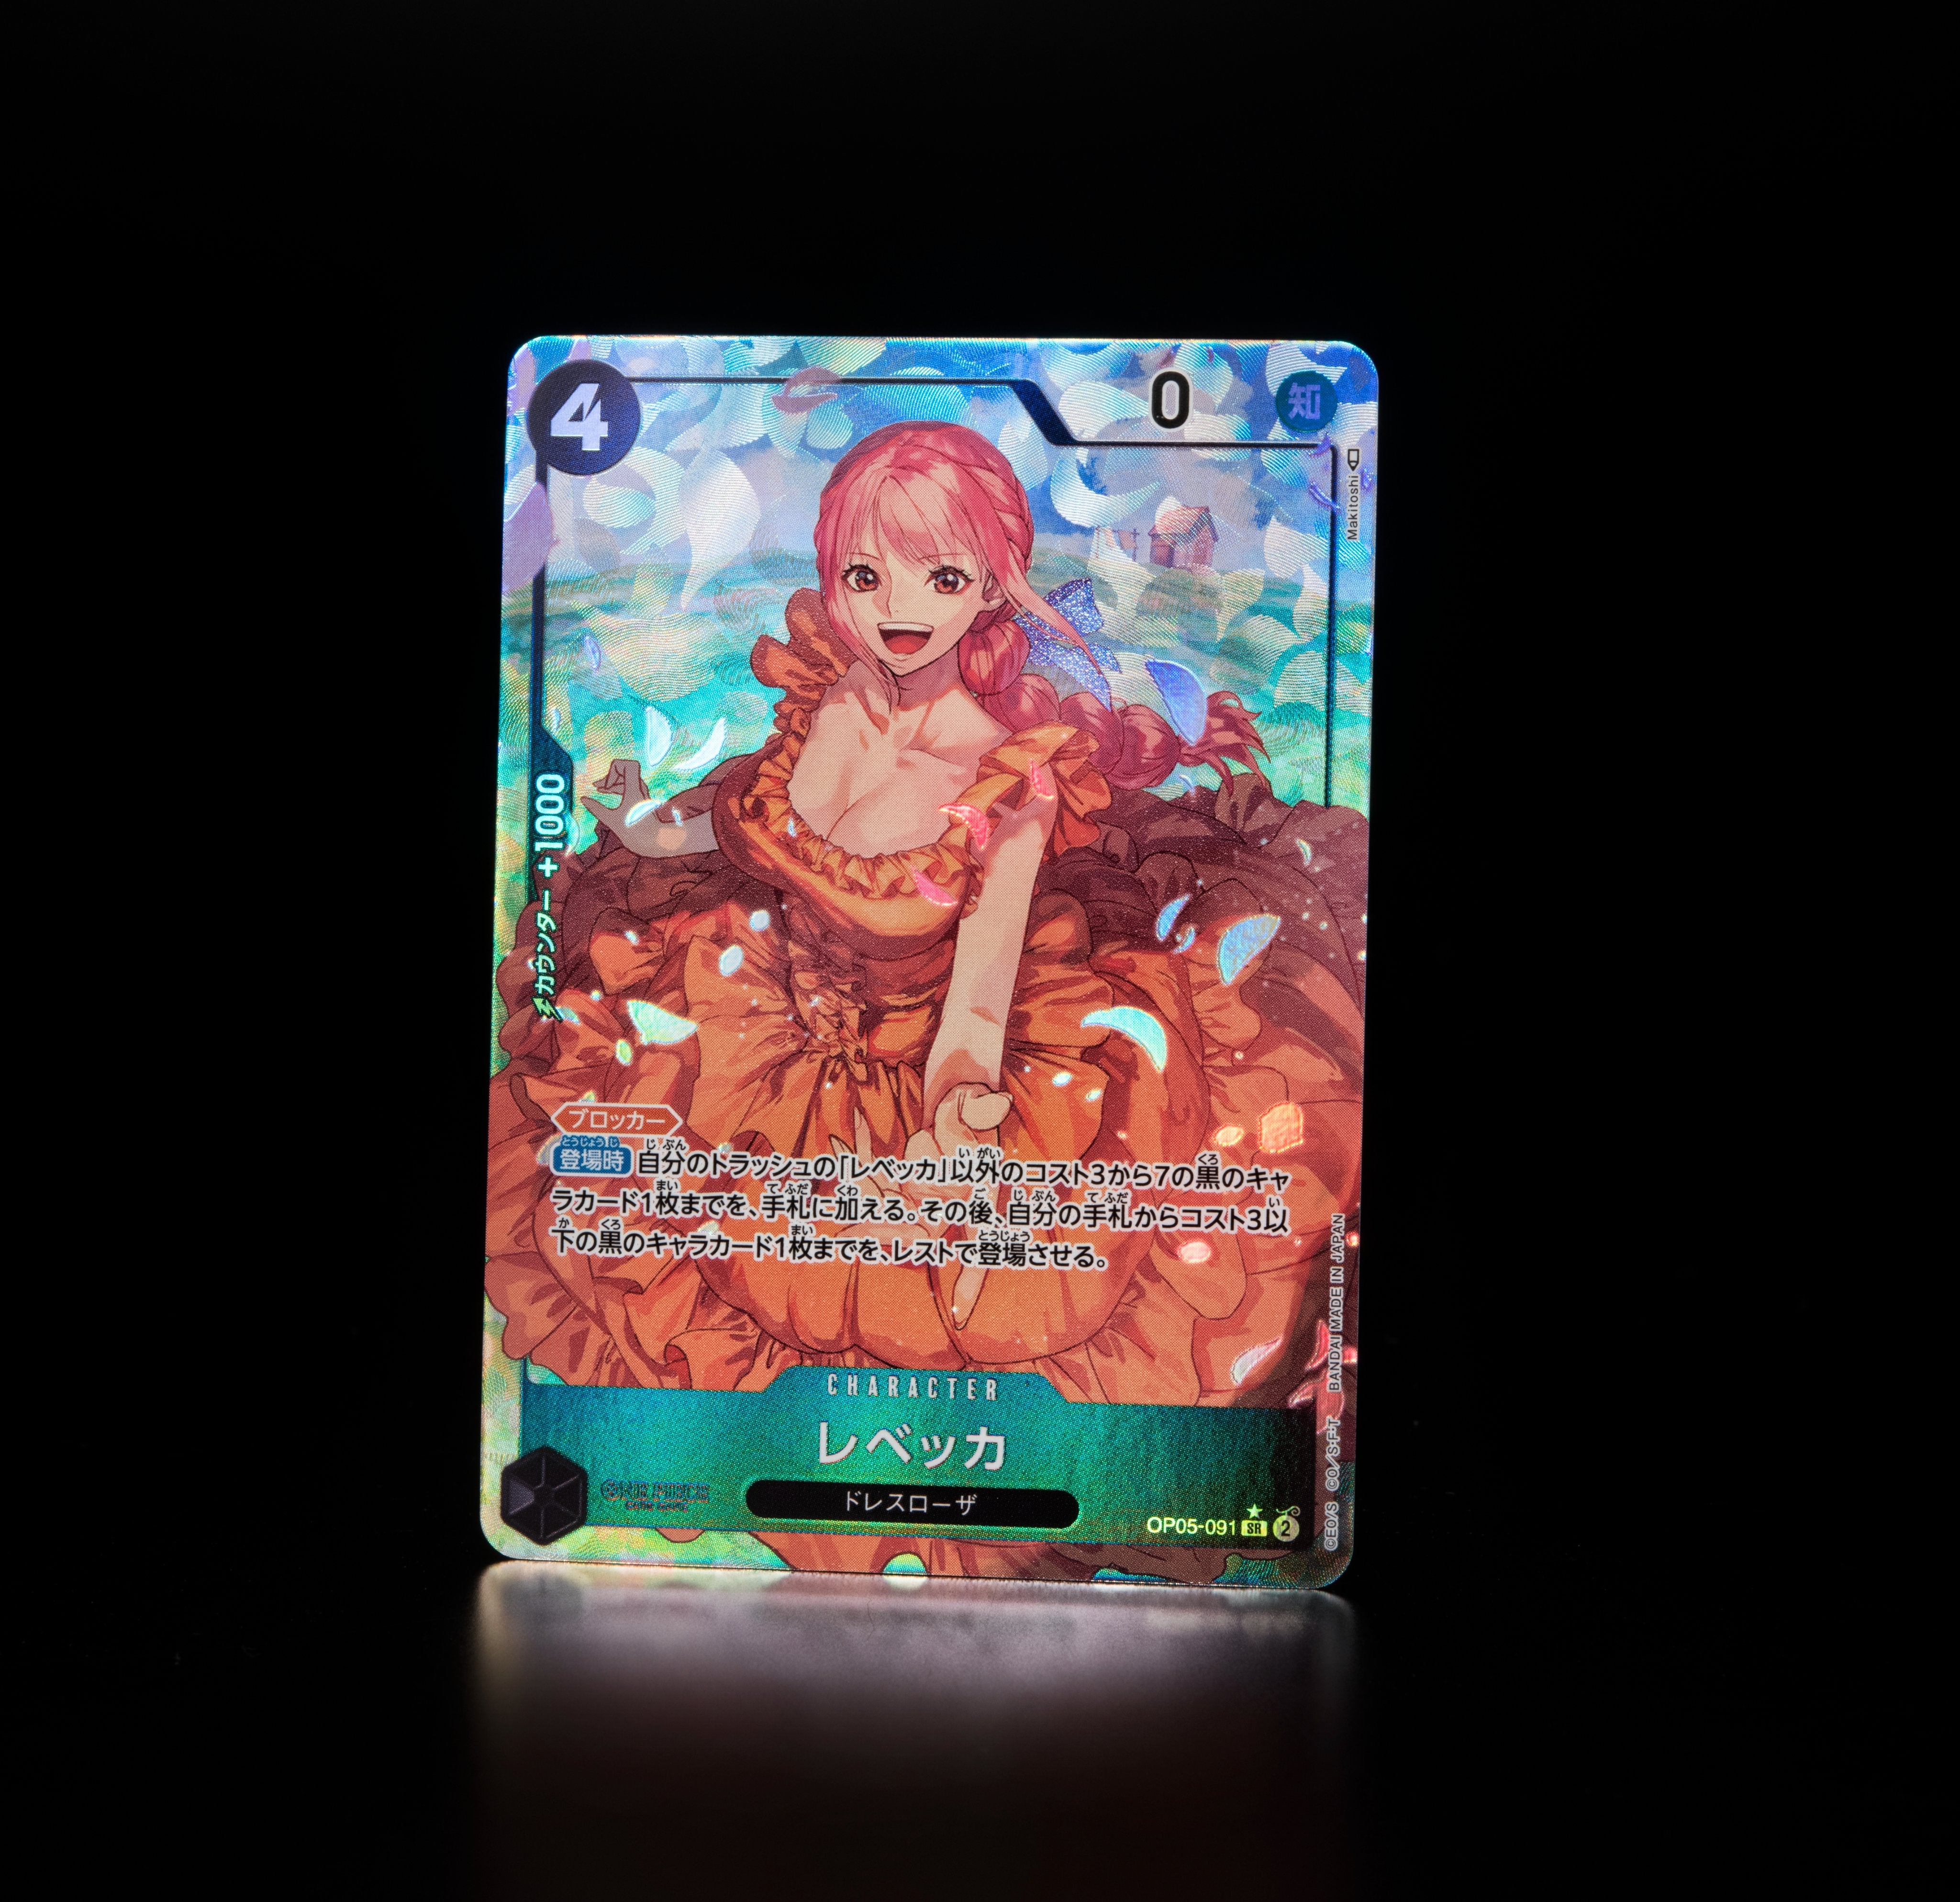 ONE PIECE CARD GAME ｢Awakening of the New Era｣  ONE PIECE CARD GAME OP05-091 Super Rare Parallel card Rebecca